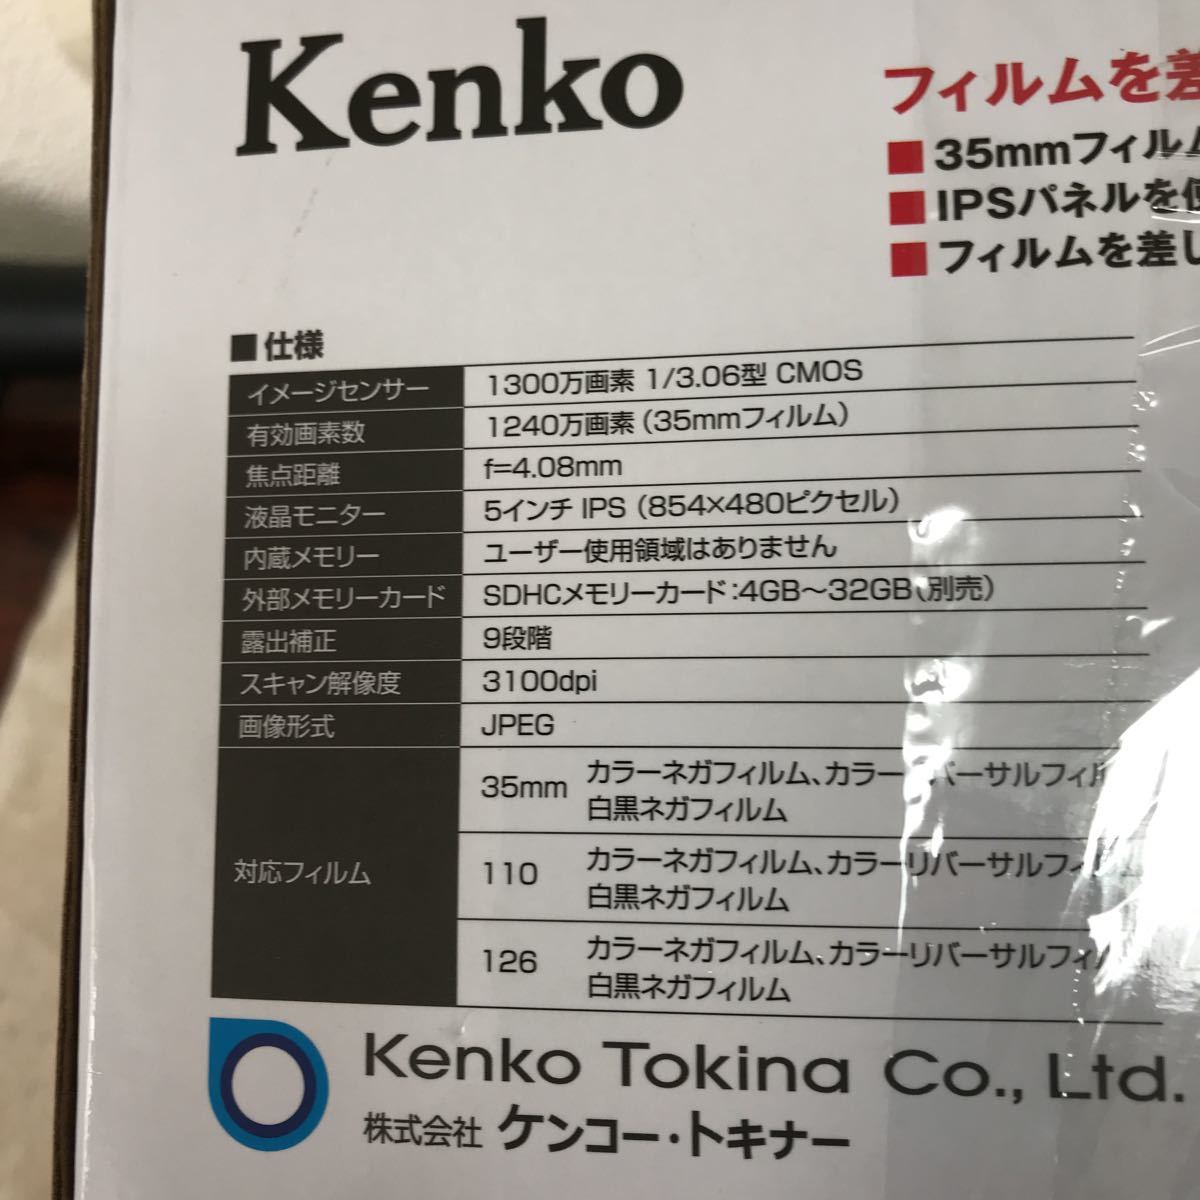 Z-184 Kenko Kenko 5 inch liquid crystal film scanner (KFS-14DF ) unused goods instructions less box little scratch equipped 